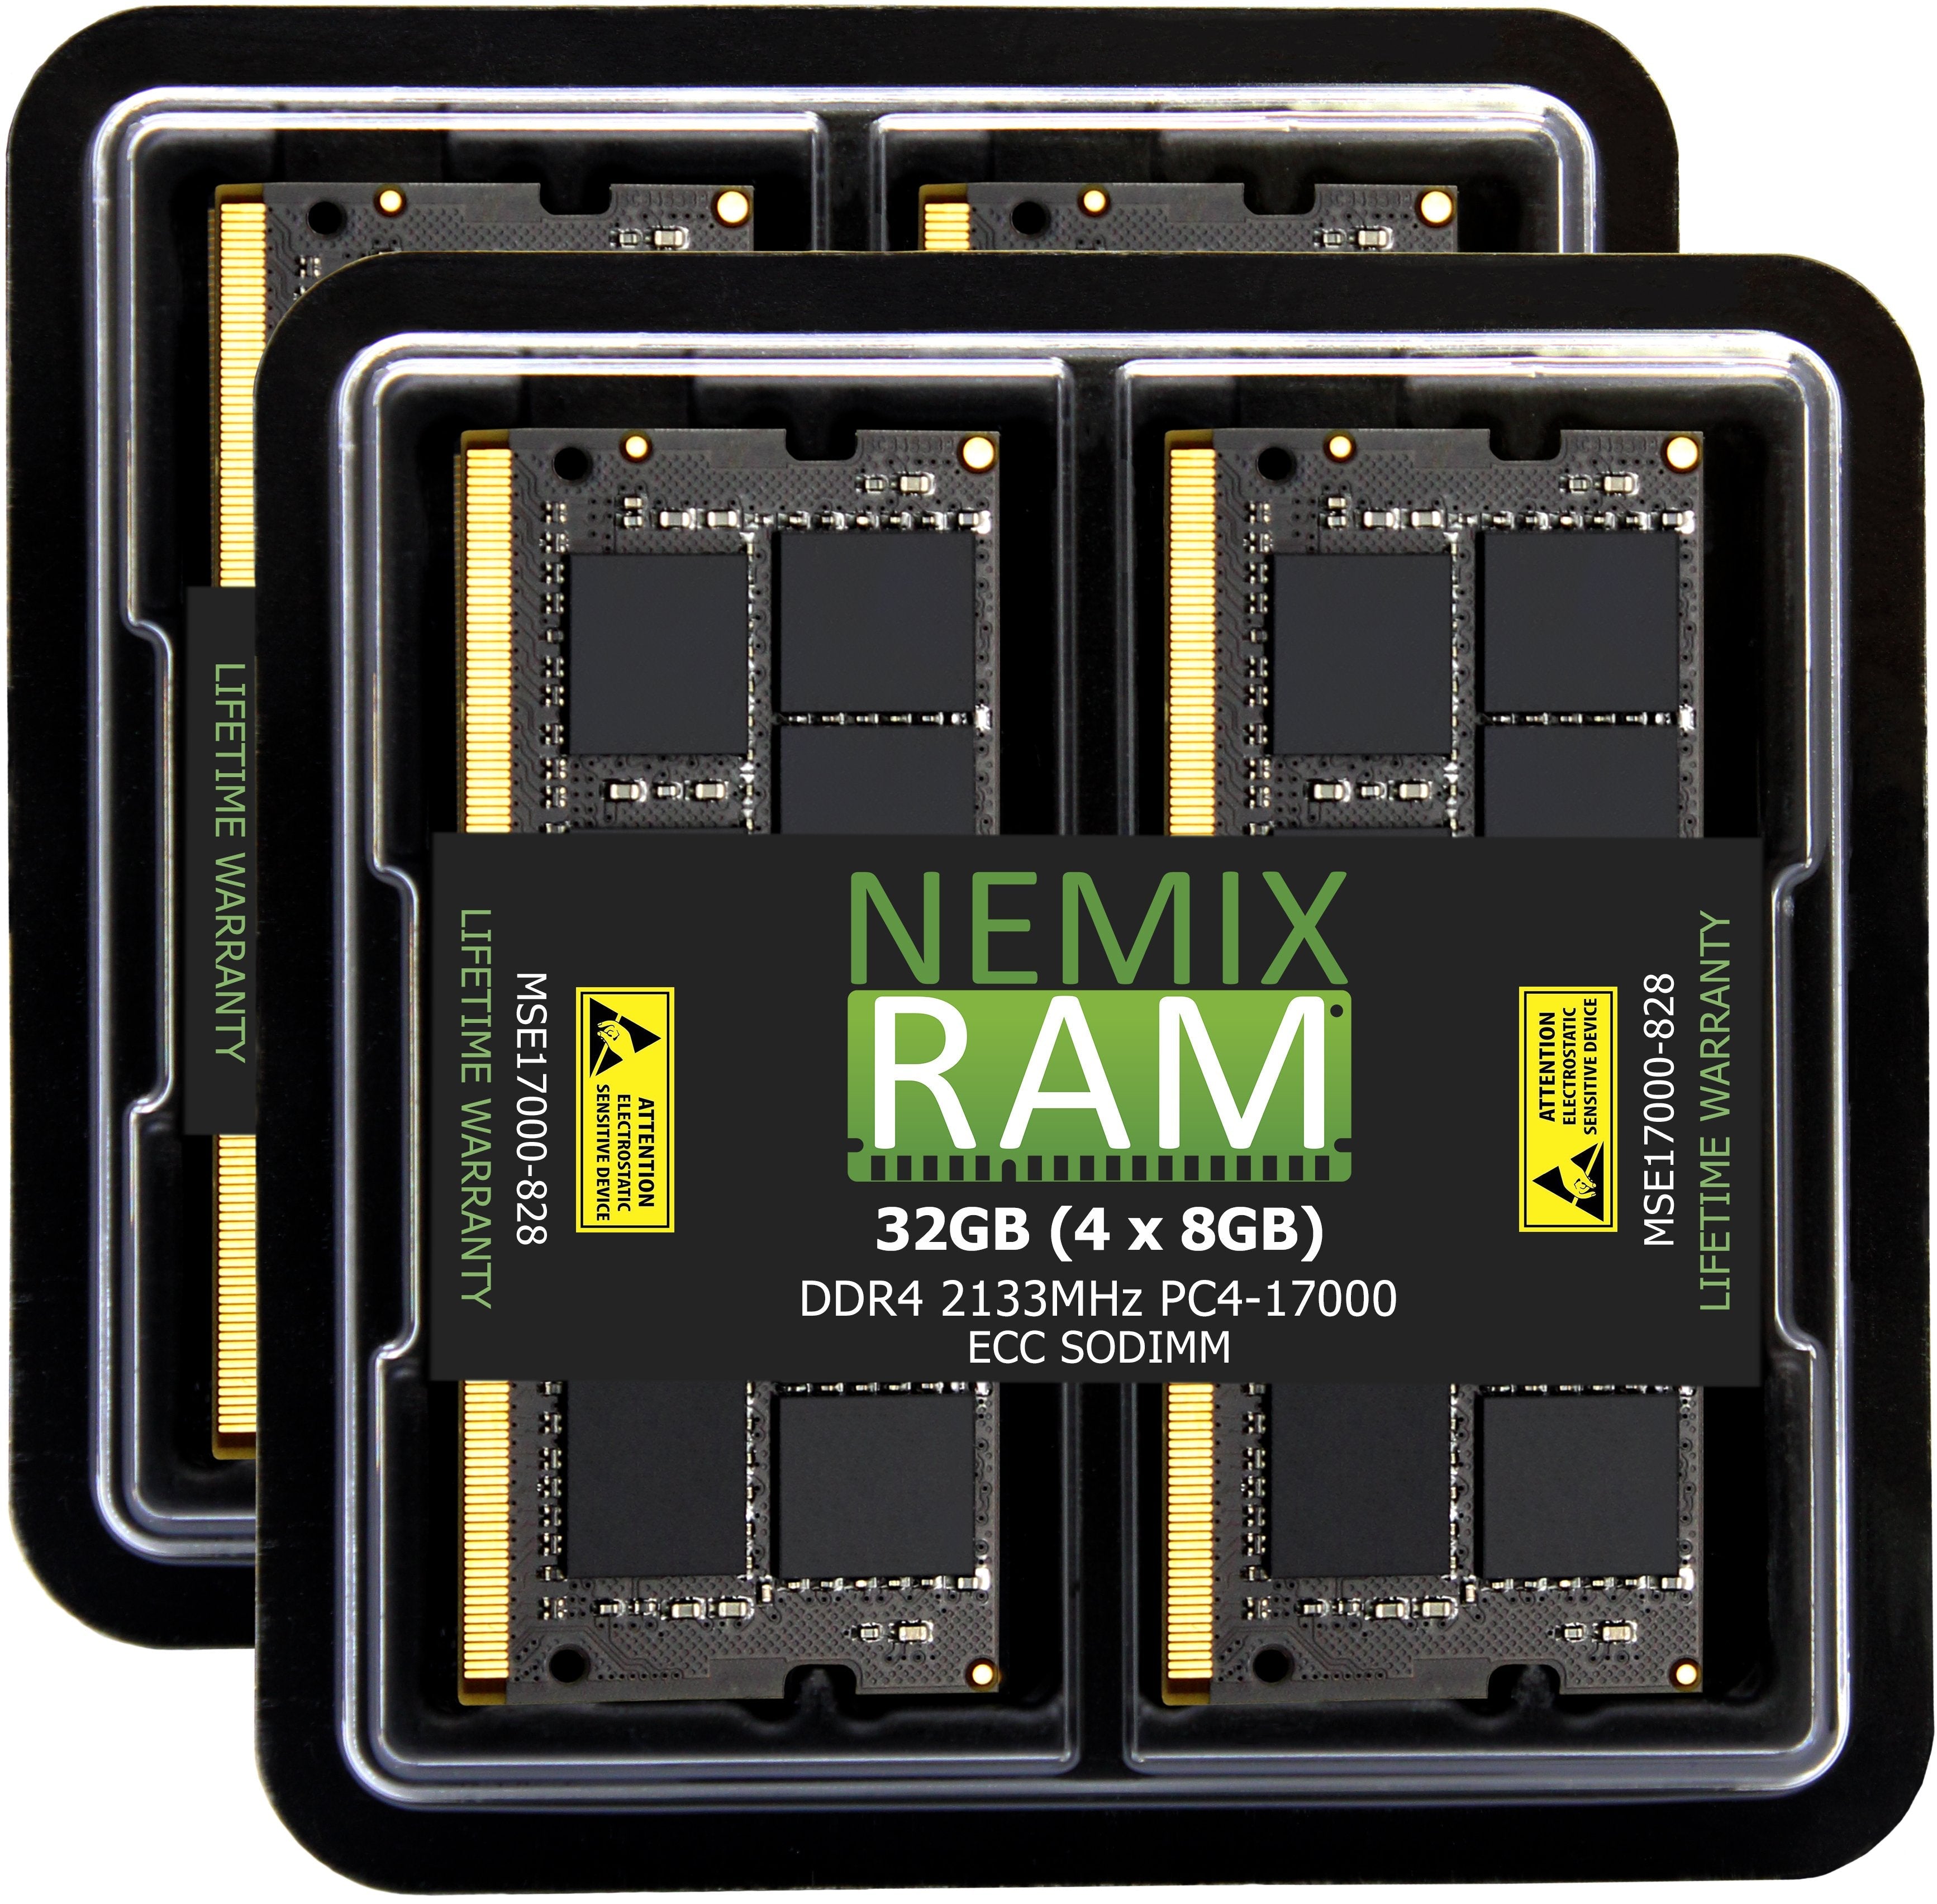 DDR4 2133MHZ PC4-17000 ECC SODIMM 2RX8